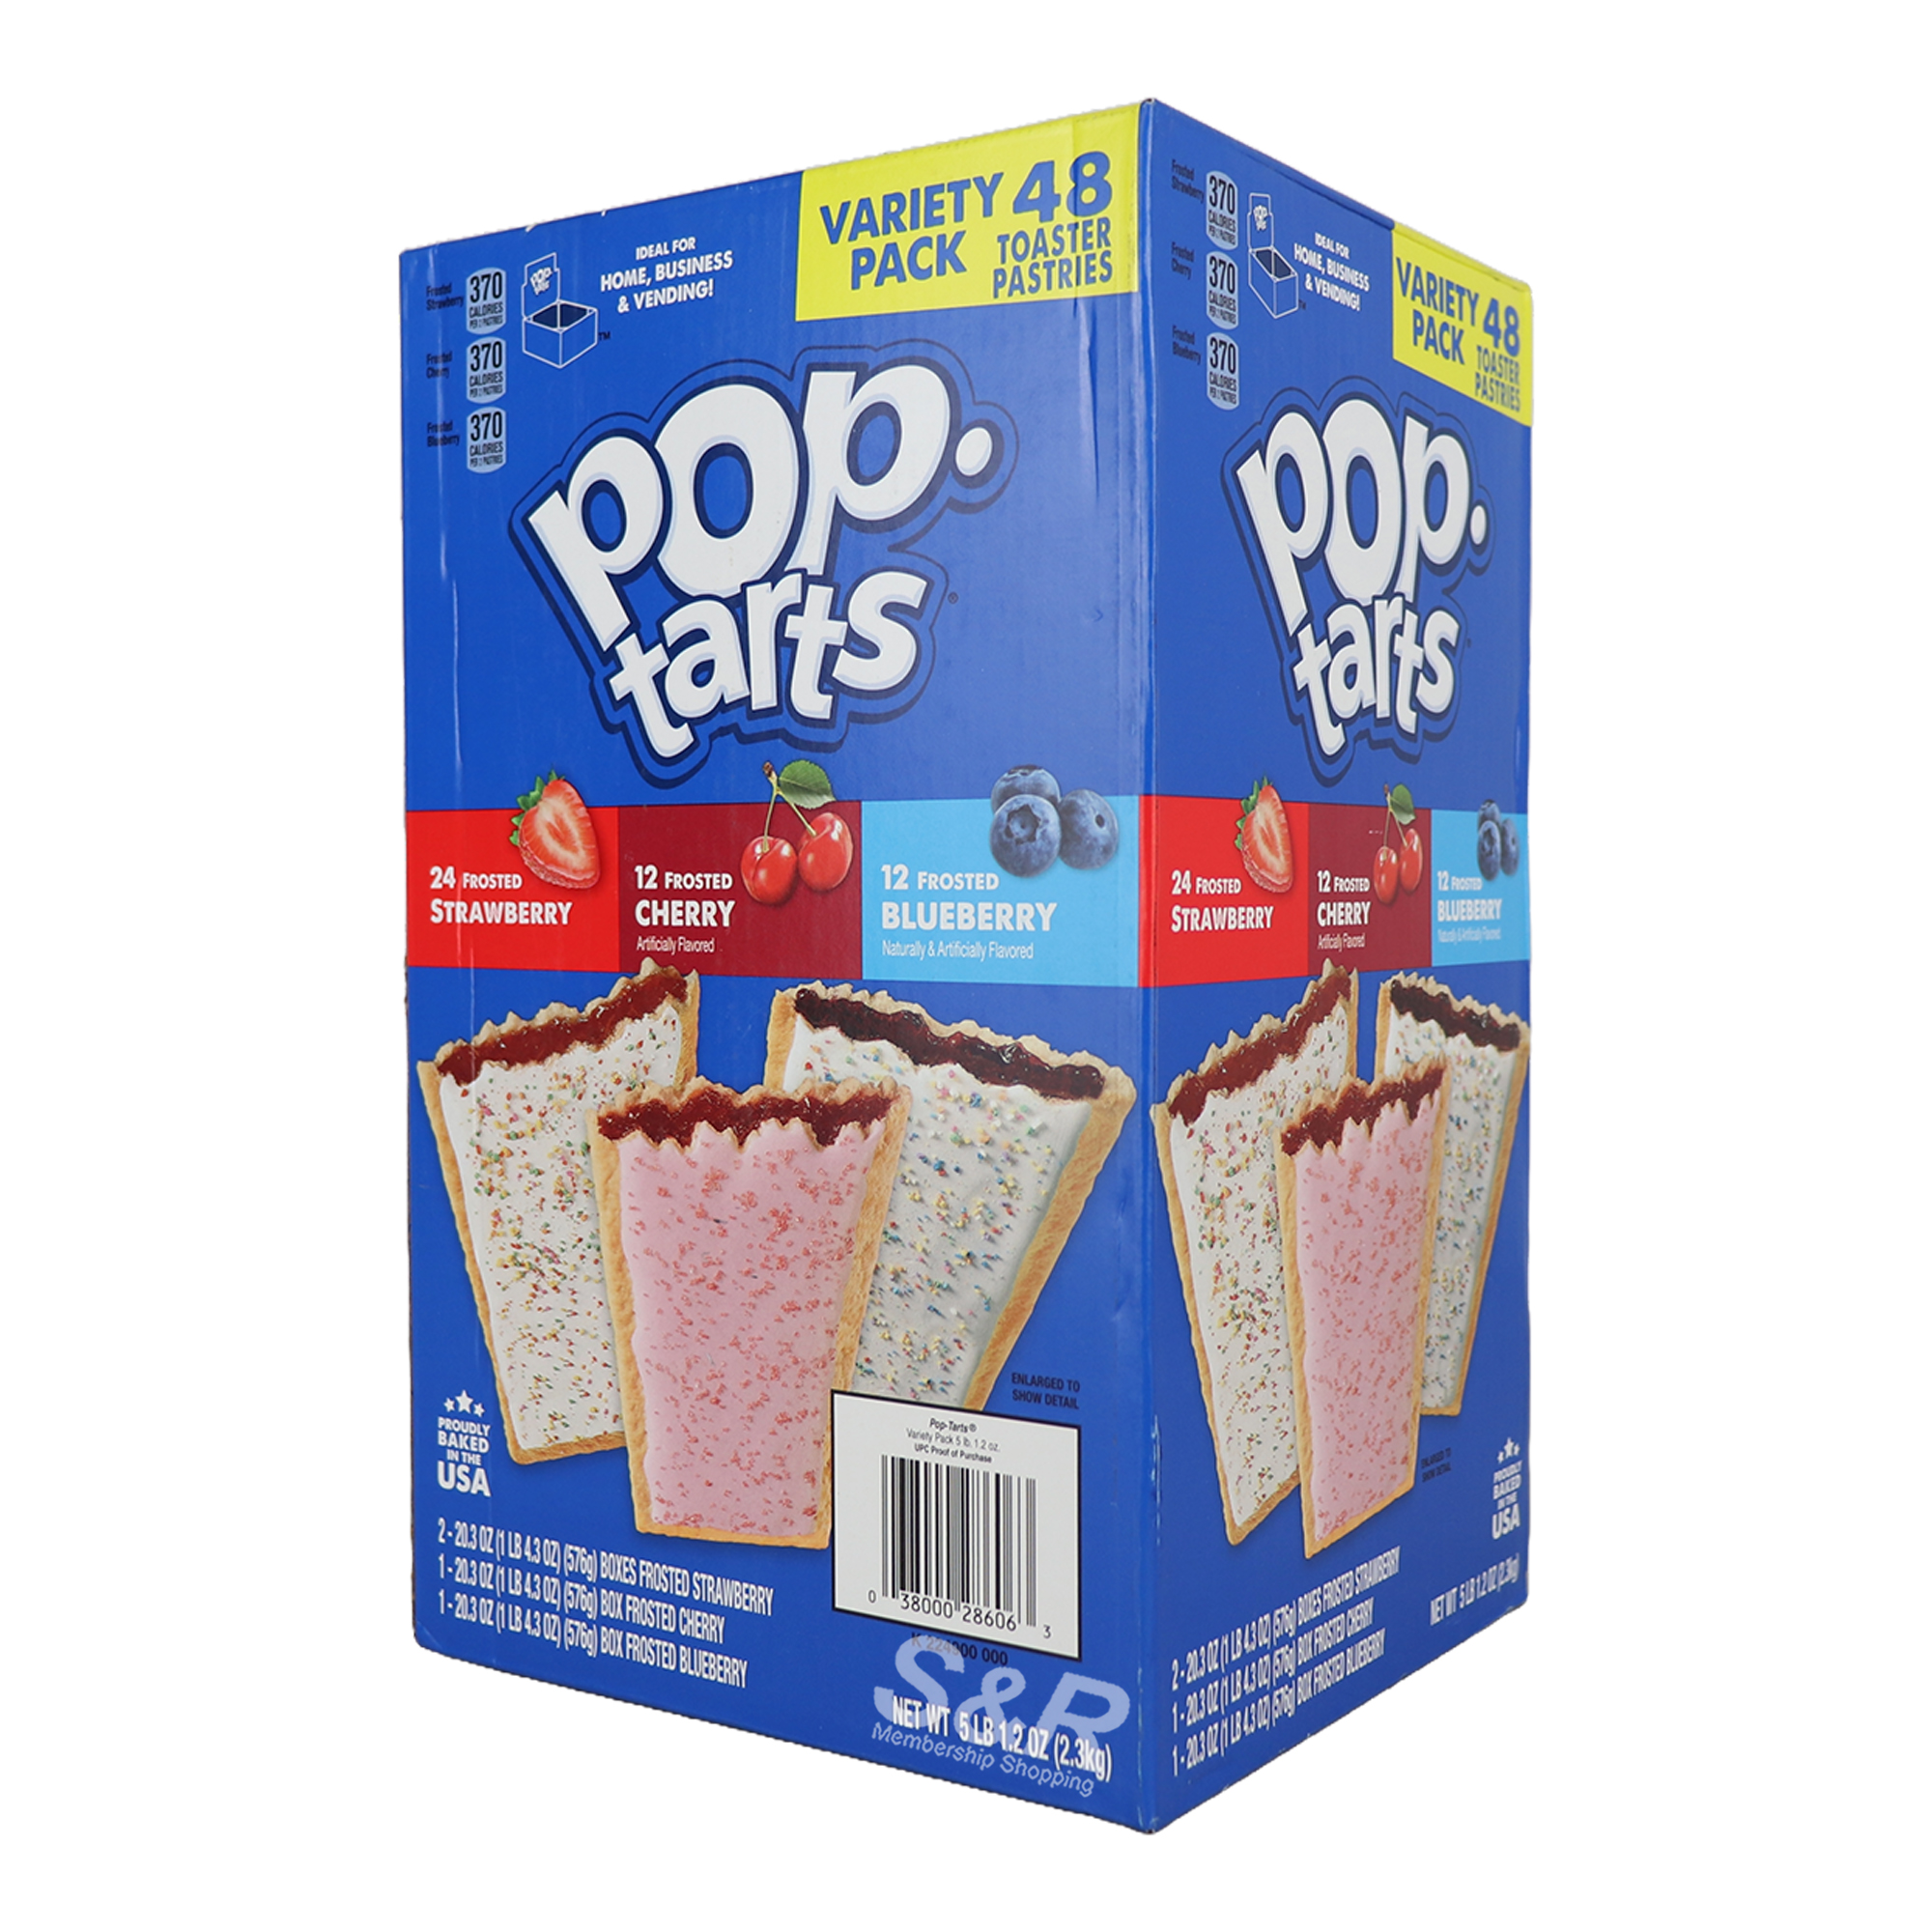 Kellogs Pop Tarts Variety Pack 48pcs